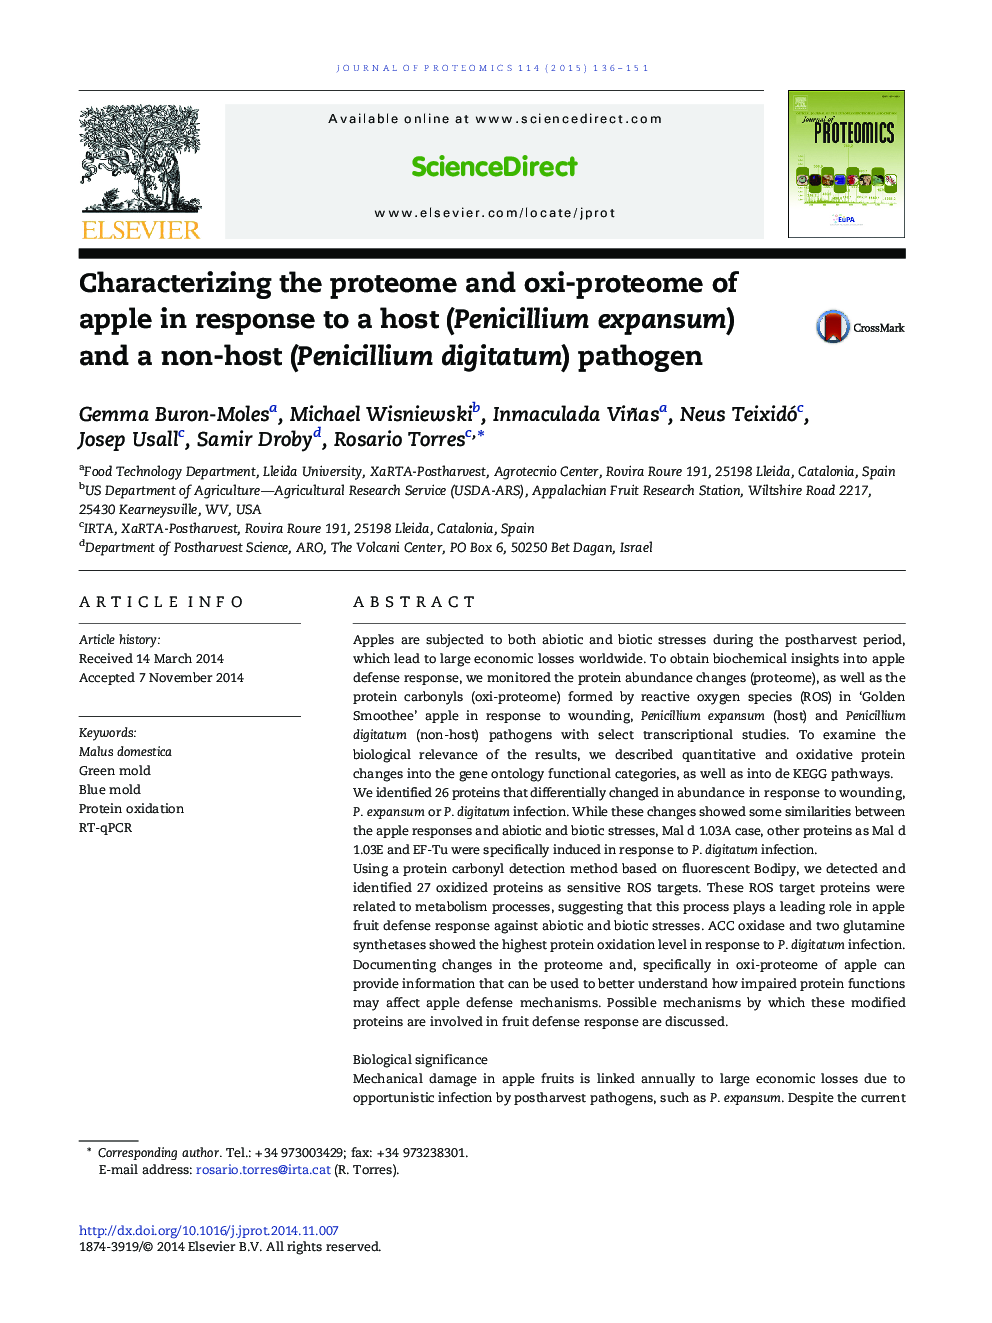 Characterizing the proteome and oxi-proteome of apple in response to a host (Penicillium expansum) and a non-host (Penicillium digitatum) pathogen